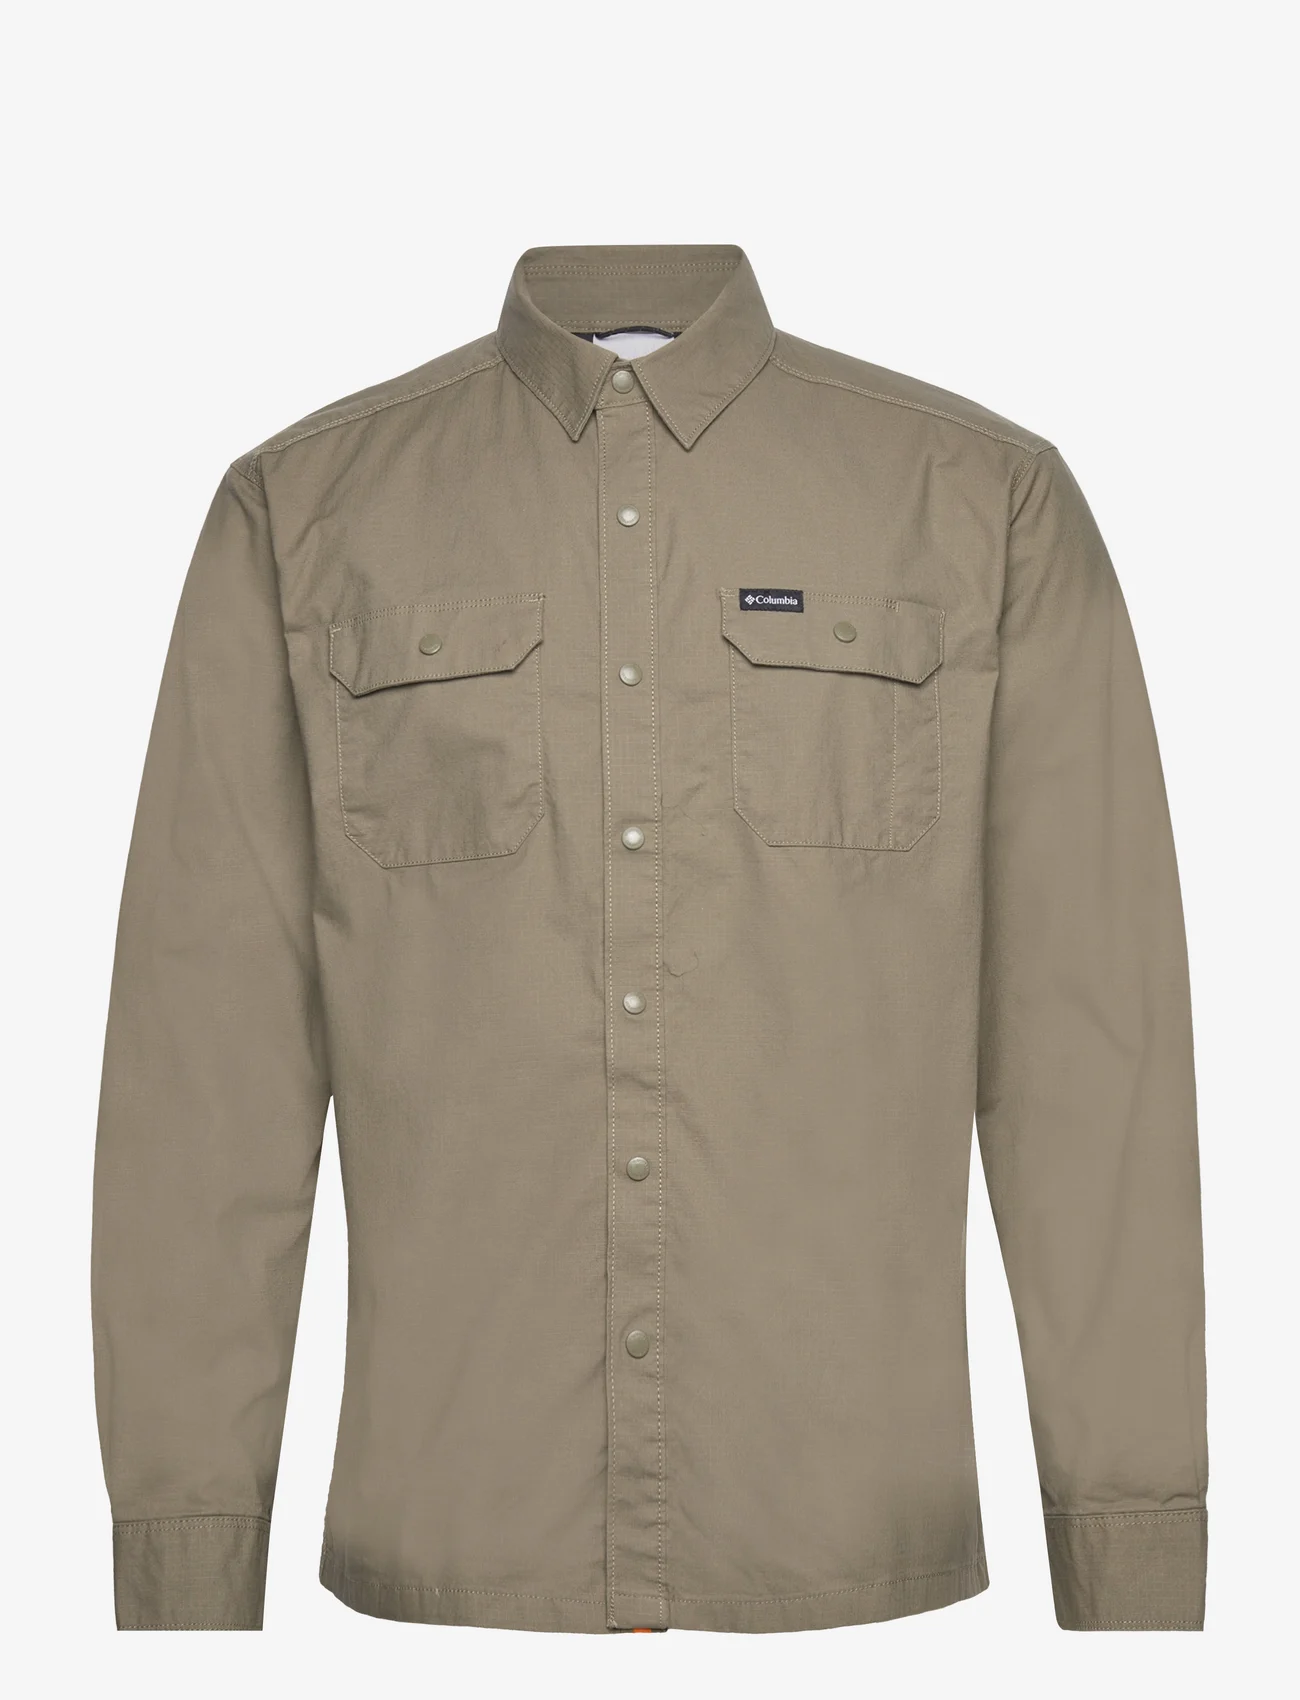 Columbia Sportswear - Landroamer Lined Shirt - basic skjortor - stone green - 0